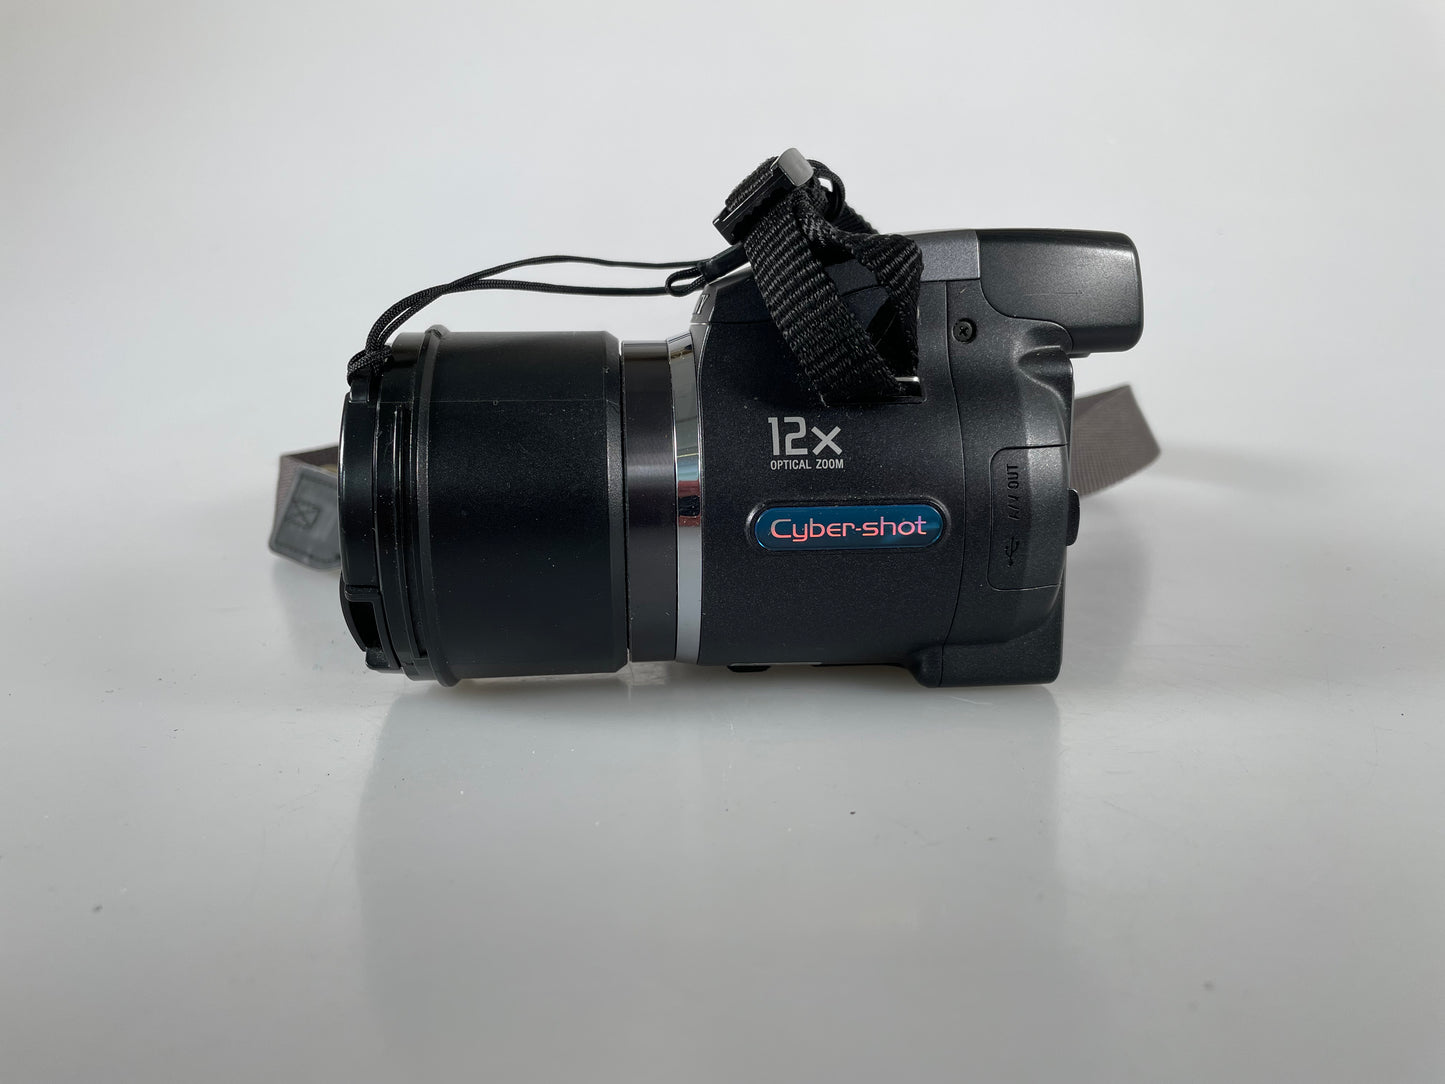 Sony Cyber Shot DSC-H5 Black 7.2 MP Digital Super Steady Shot Camera